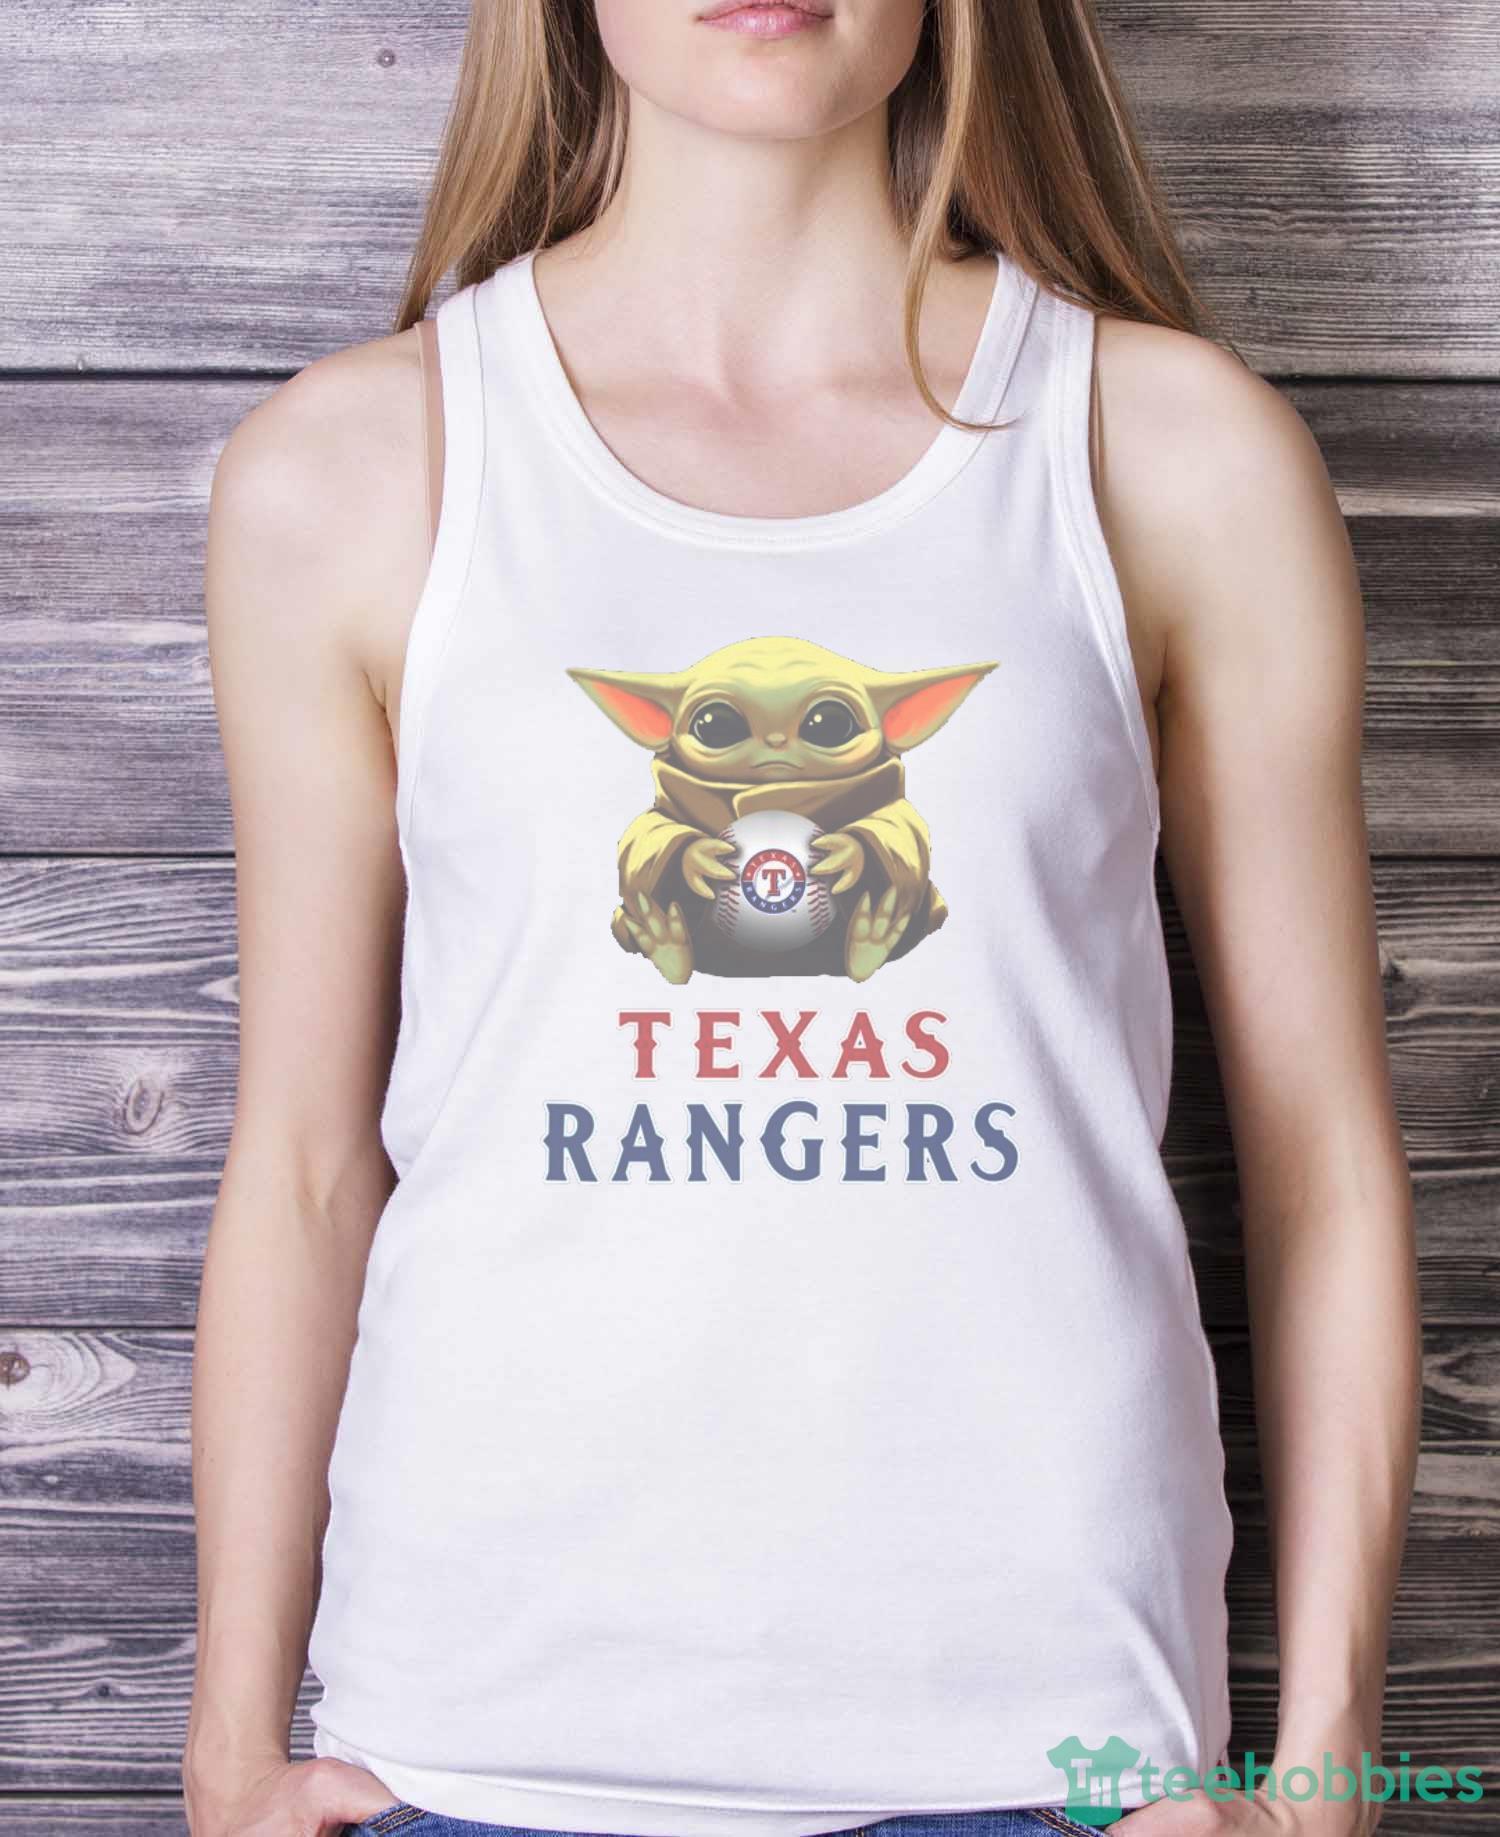 MLB Baseball Texas Rangers Star Wars Baby Yoda Shirt T Shirt - White Ladies Tank Top